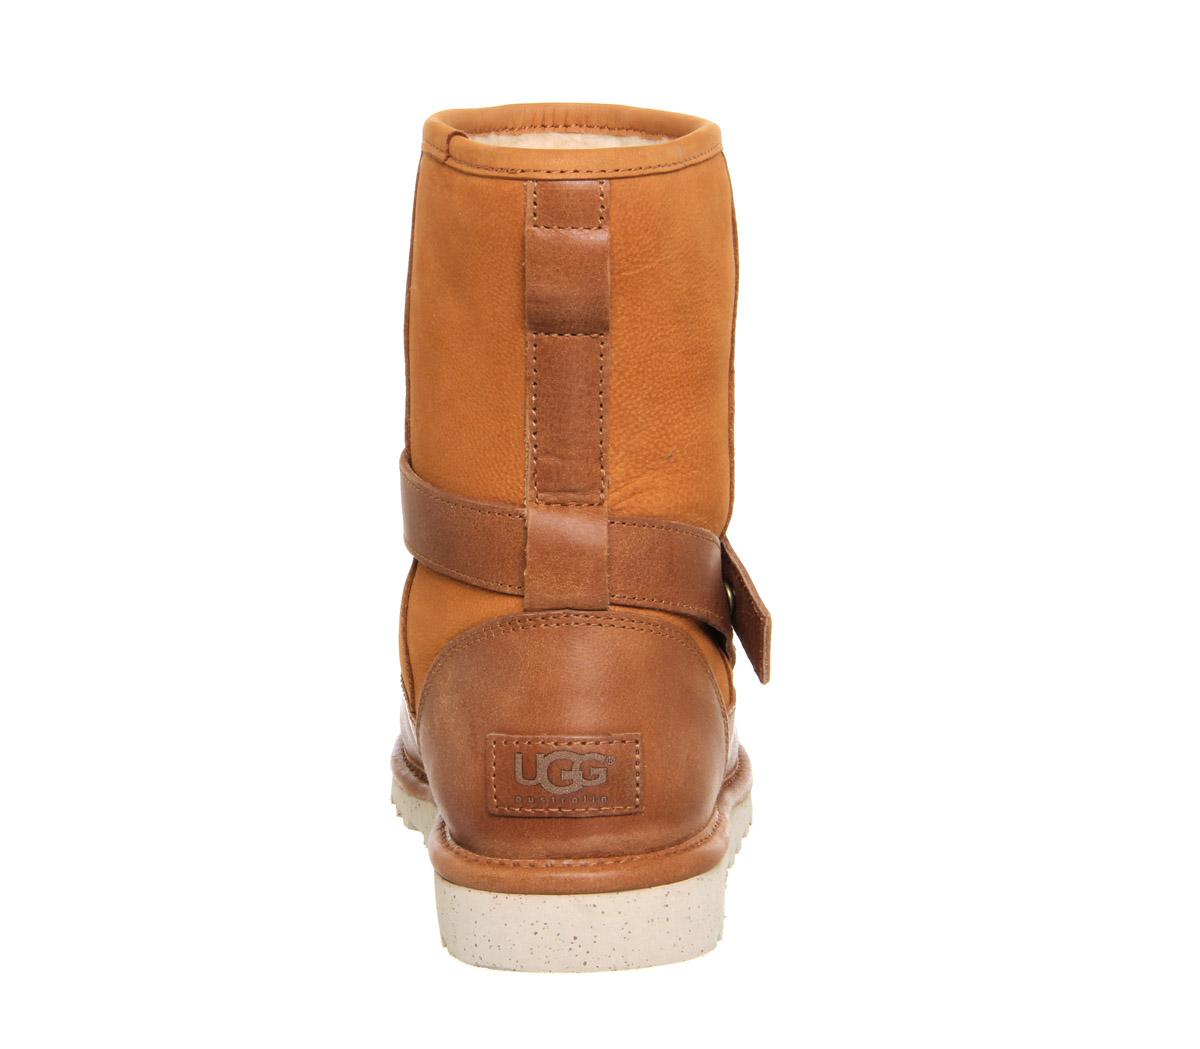 UGG Anali Boots in Chestnut (Brown) - Lyst